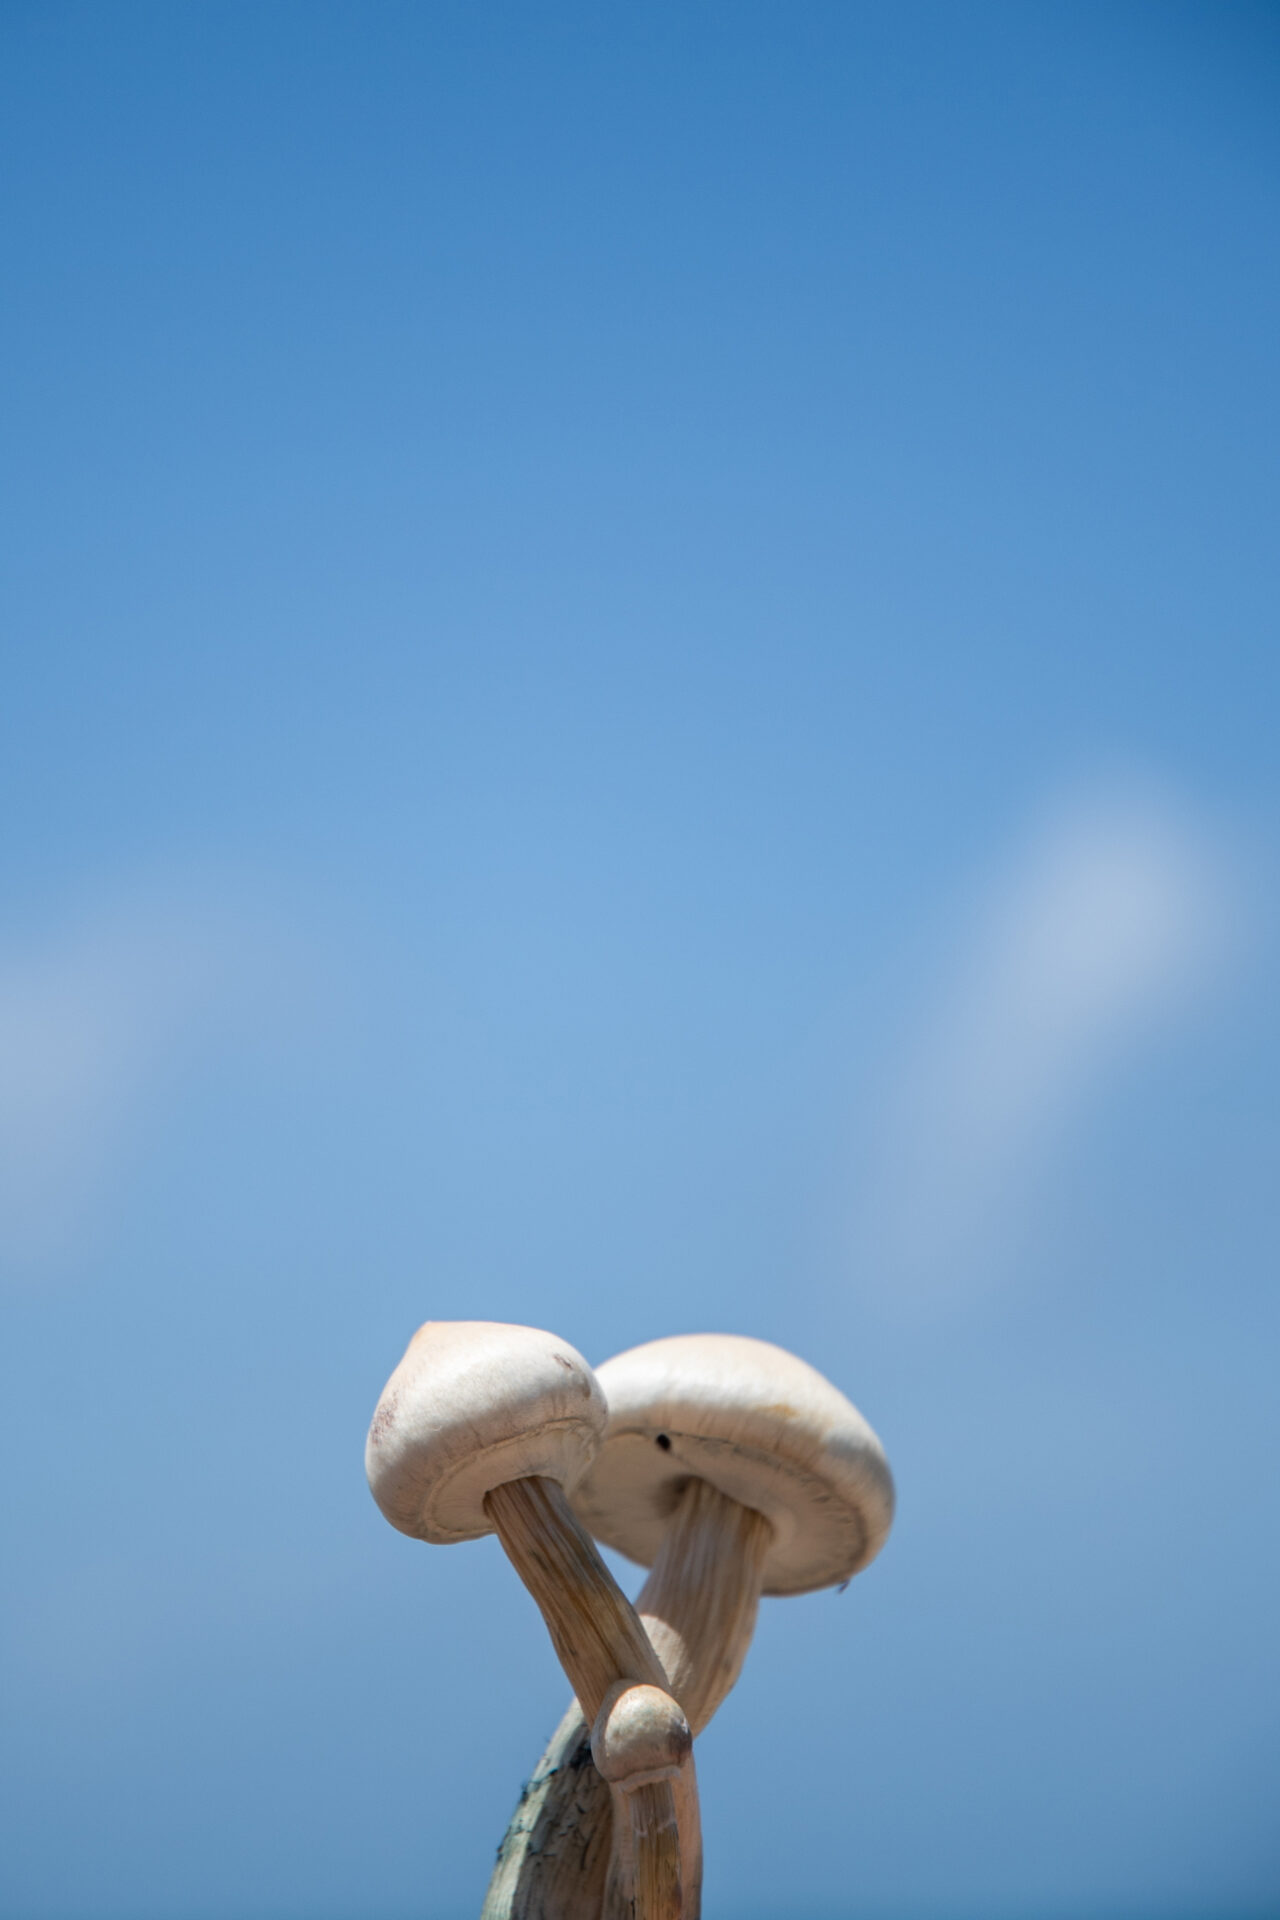 psilocybin mushrooms in front of blue sky